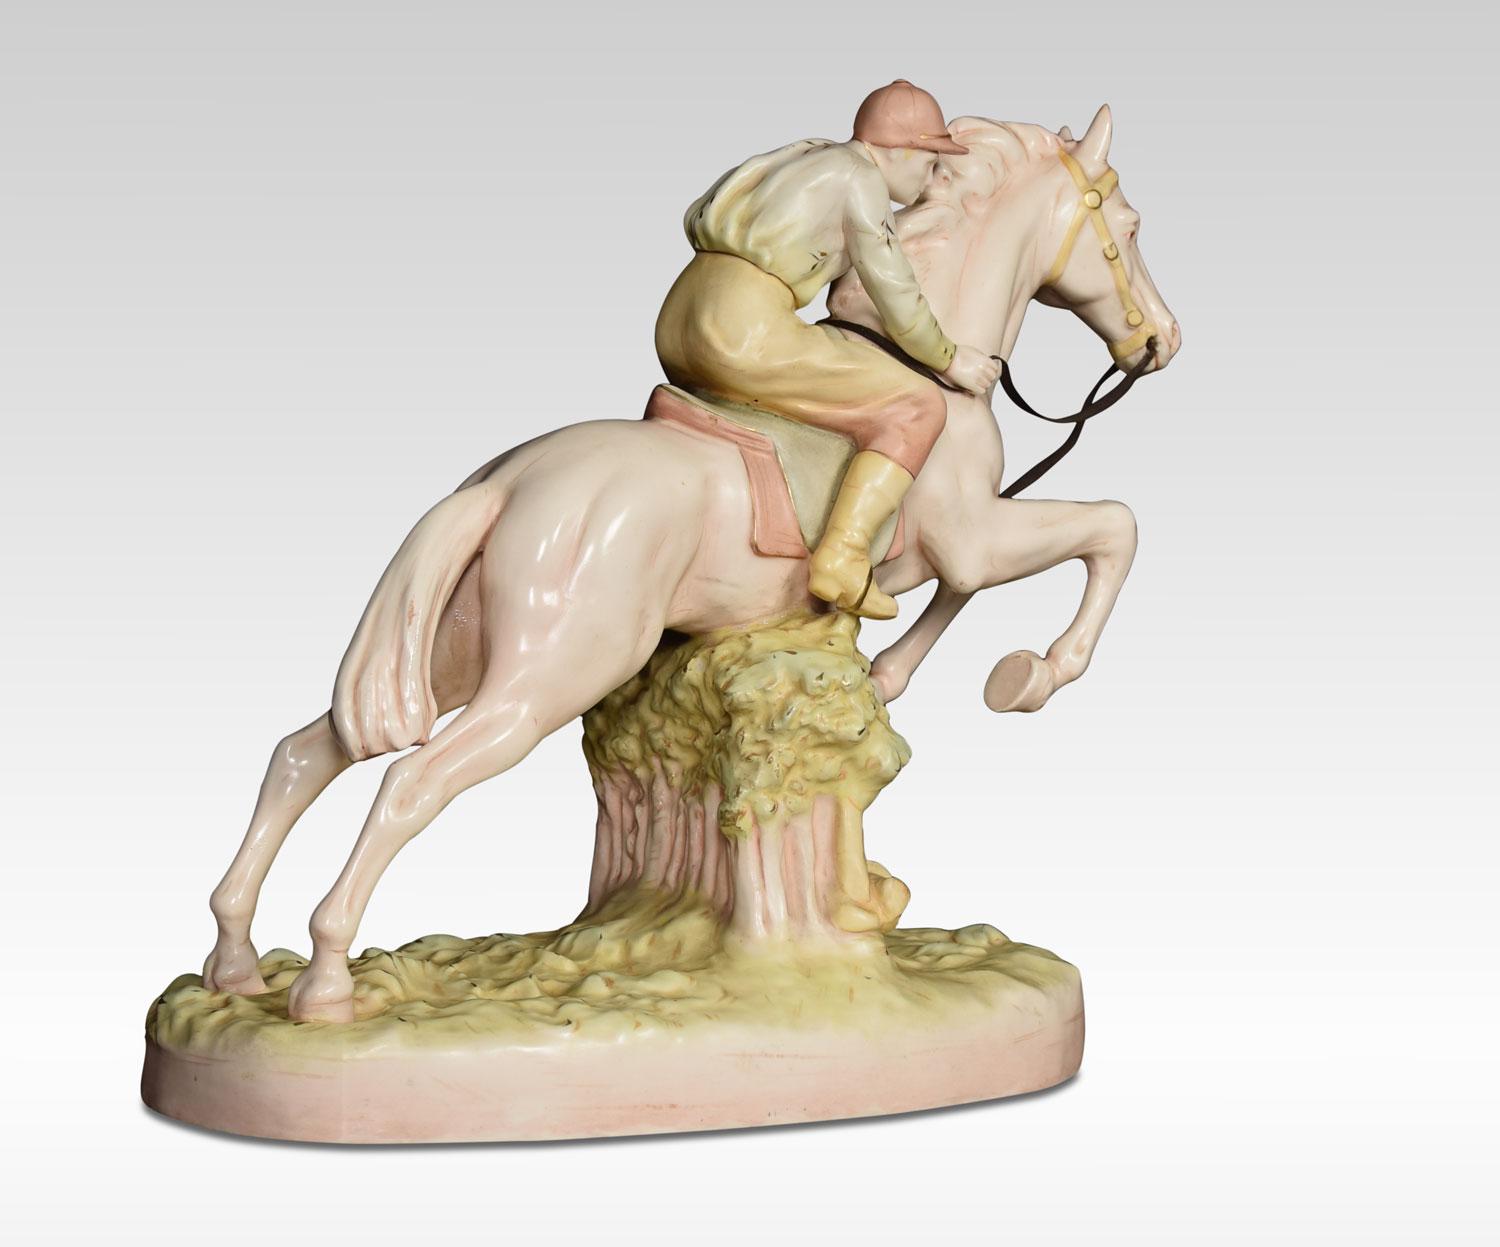 royal dux horse figurine